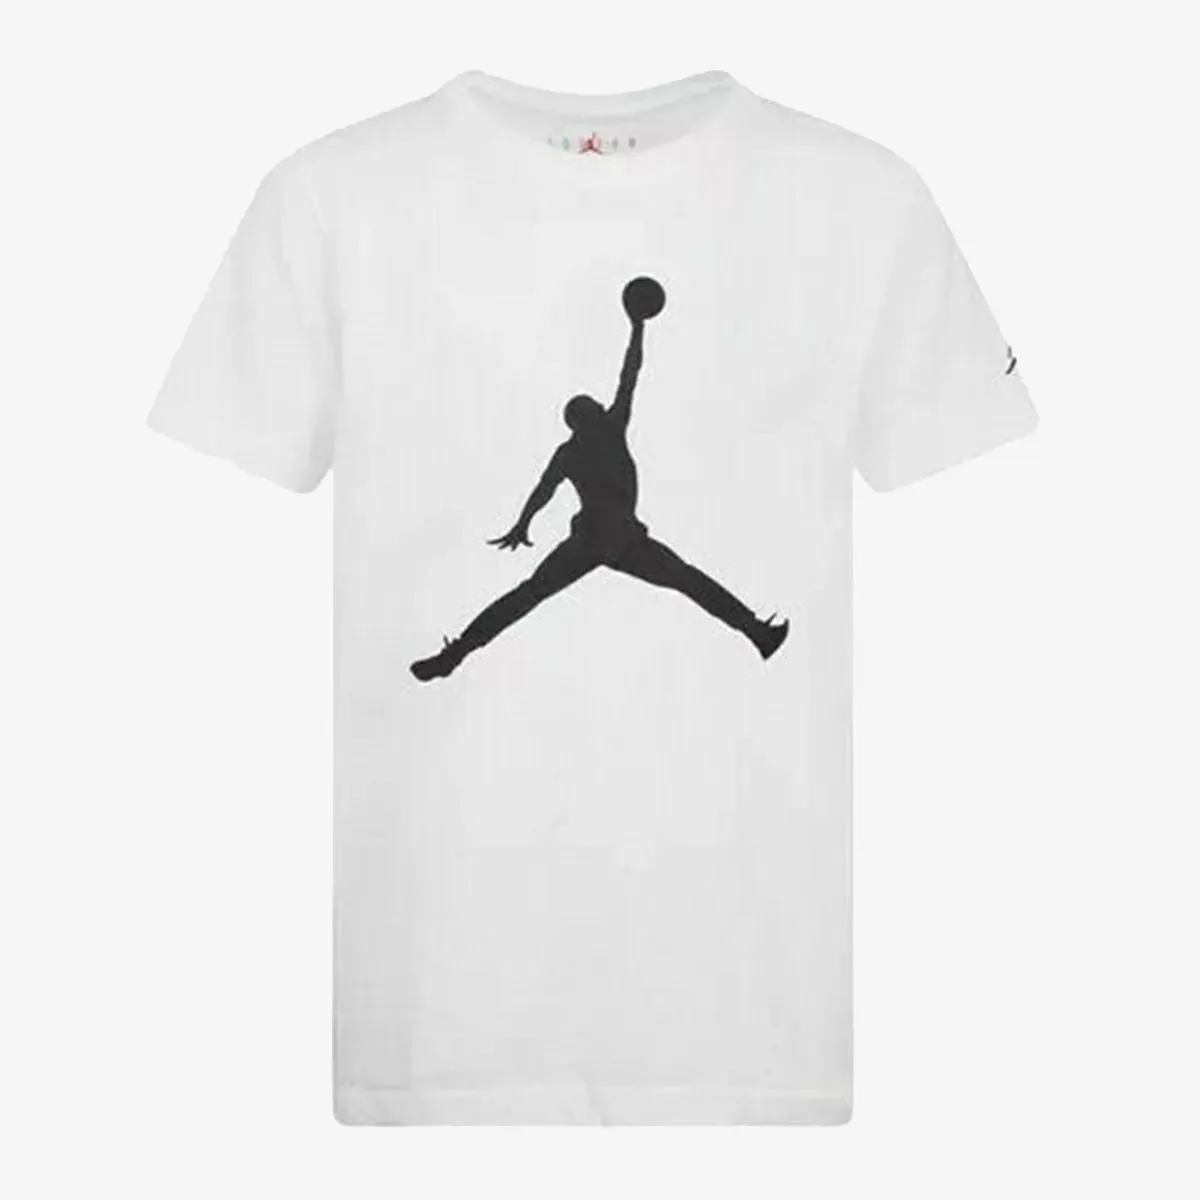 Nike Jumpman 